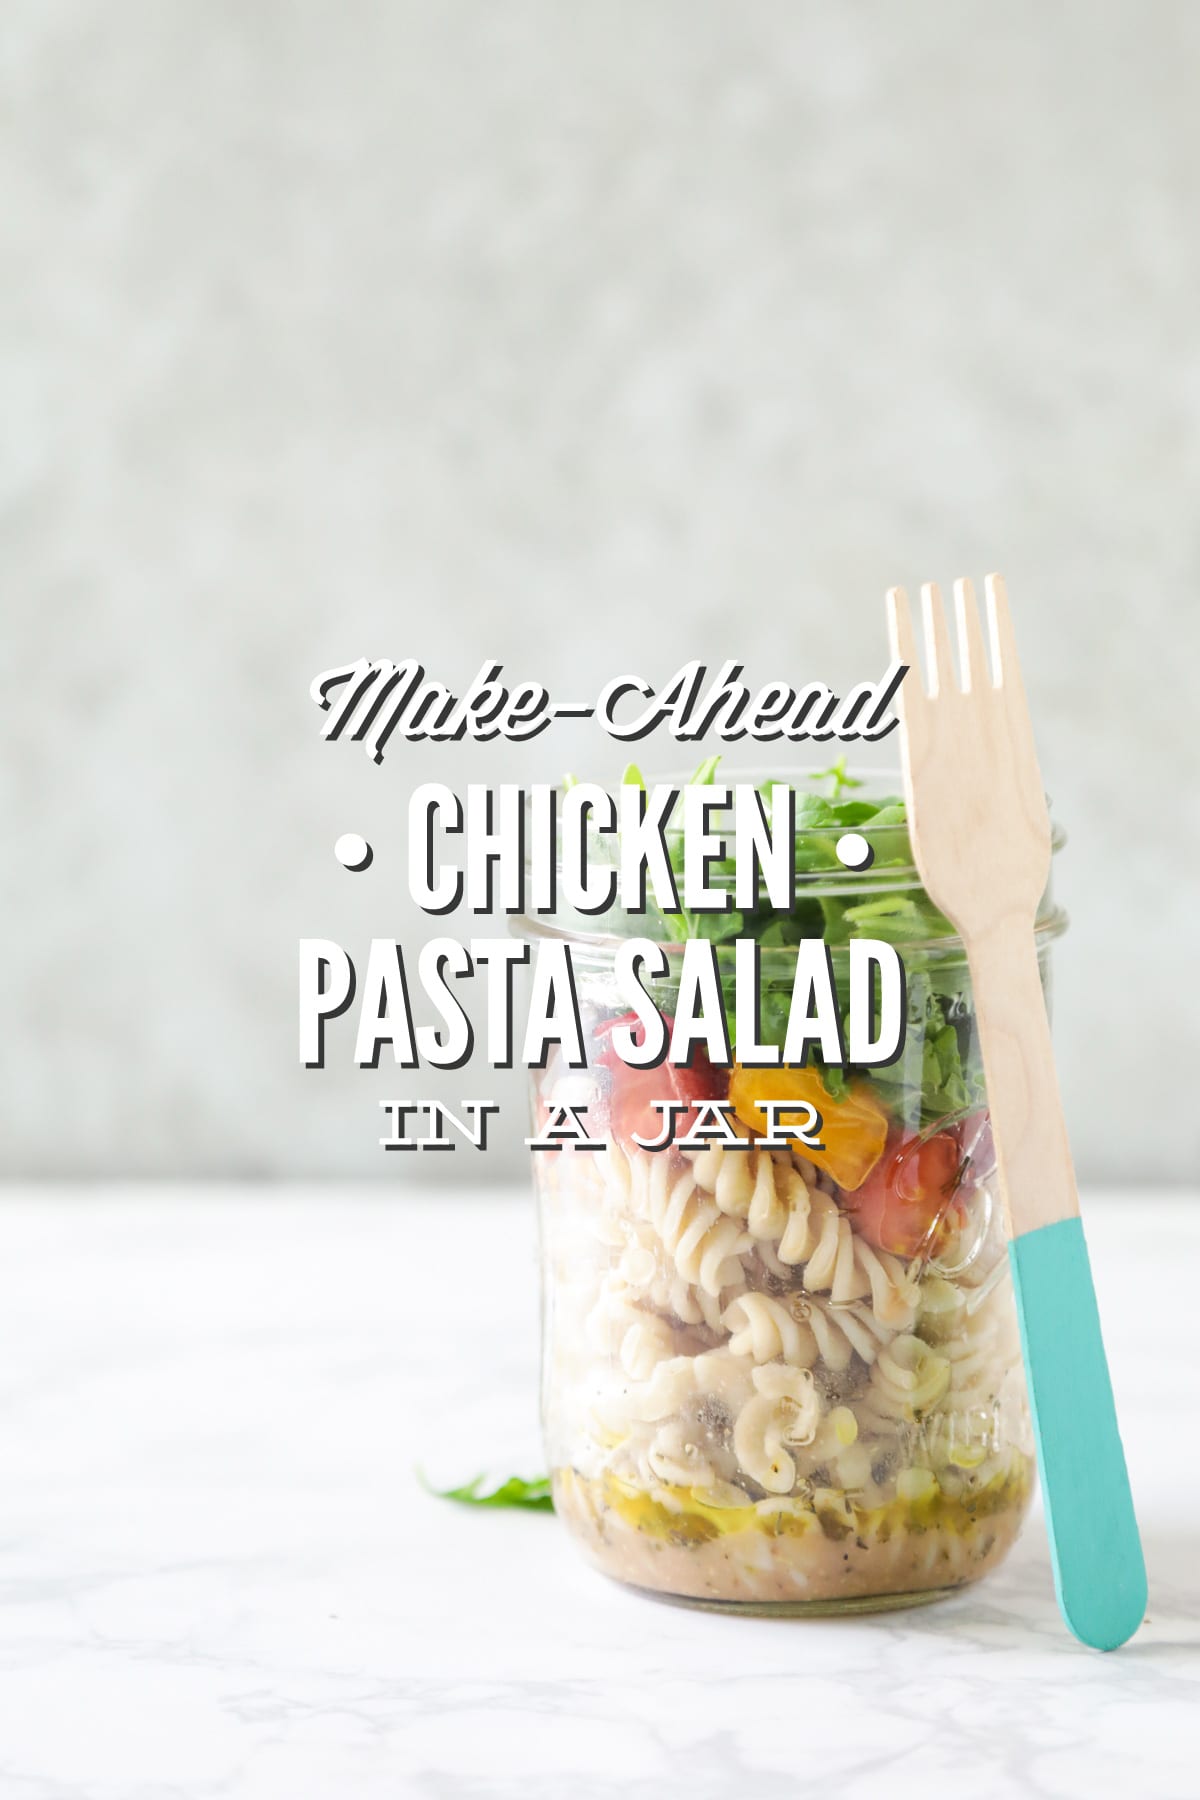 Make-Ahead Chicken Pasta Salad